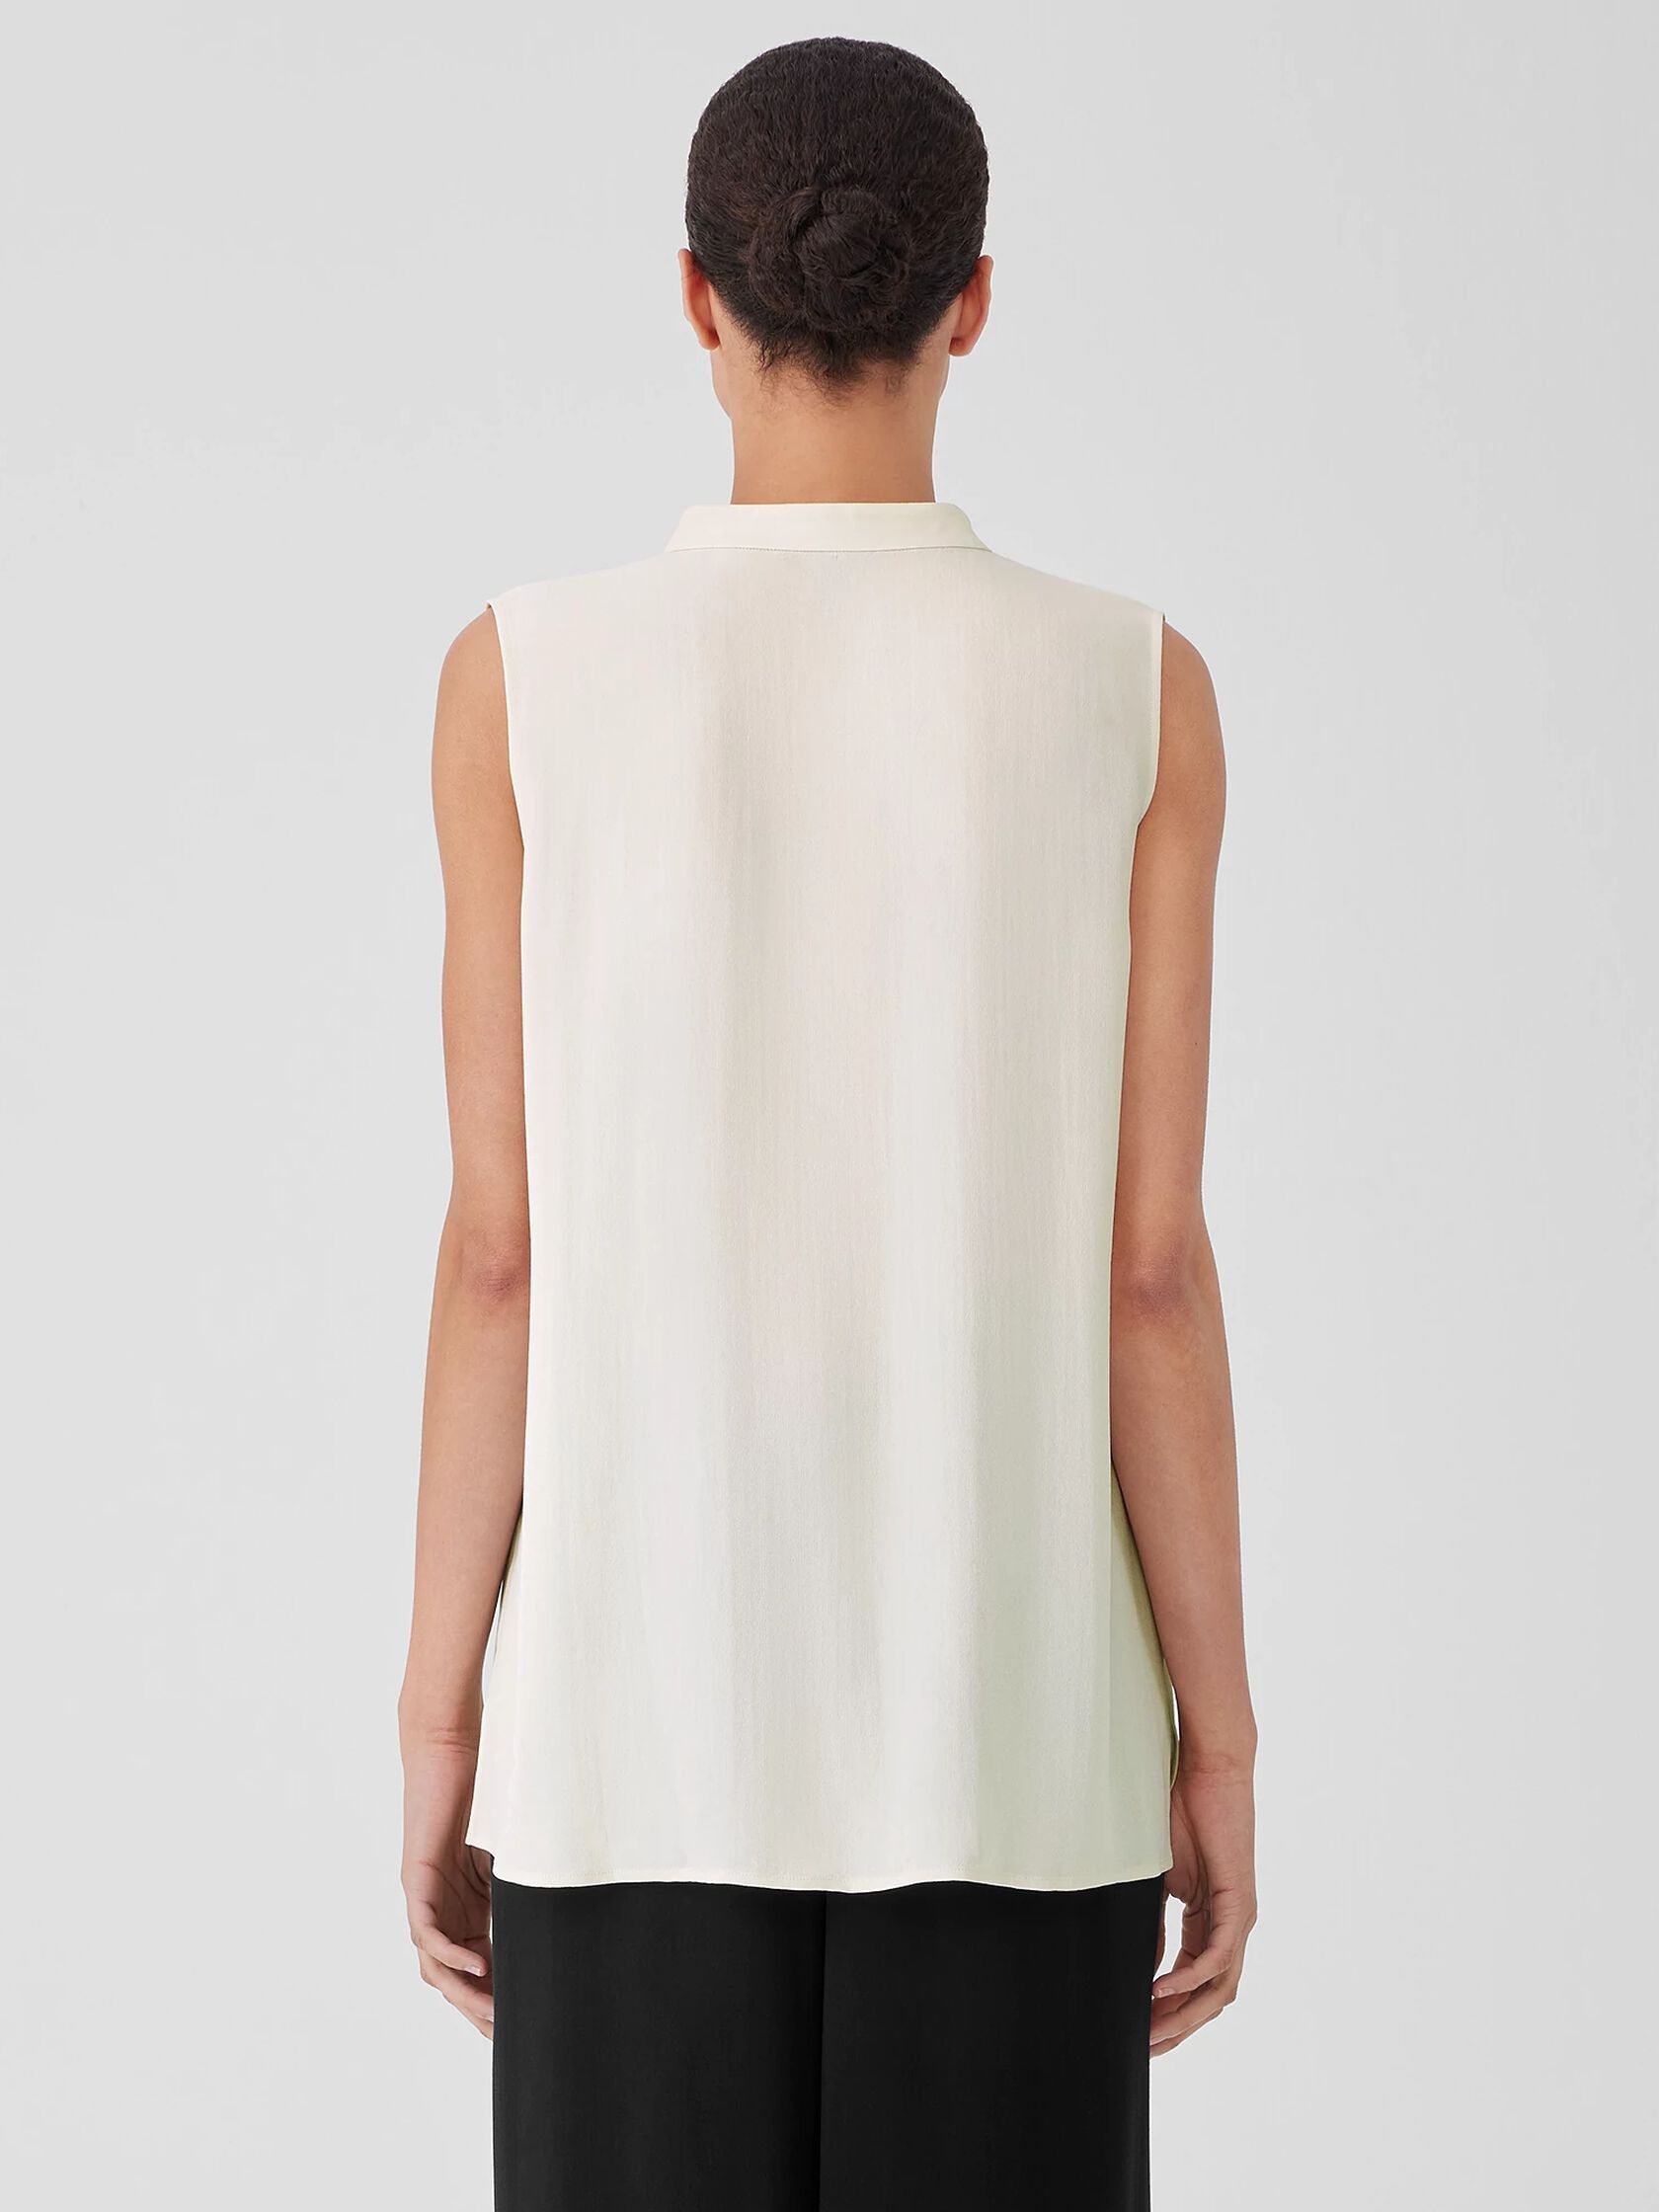 270 Sleeveless blouses ideas  fancy blouse designs, trendy blouse designs,  stylish blouse design